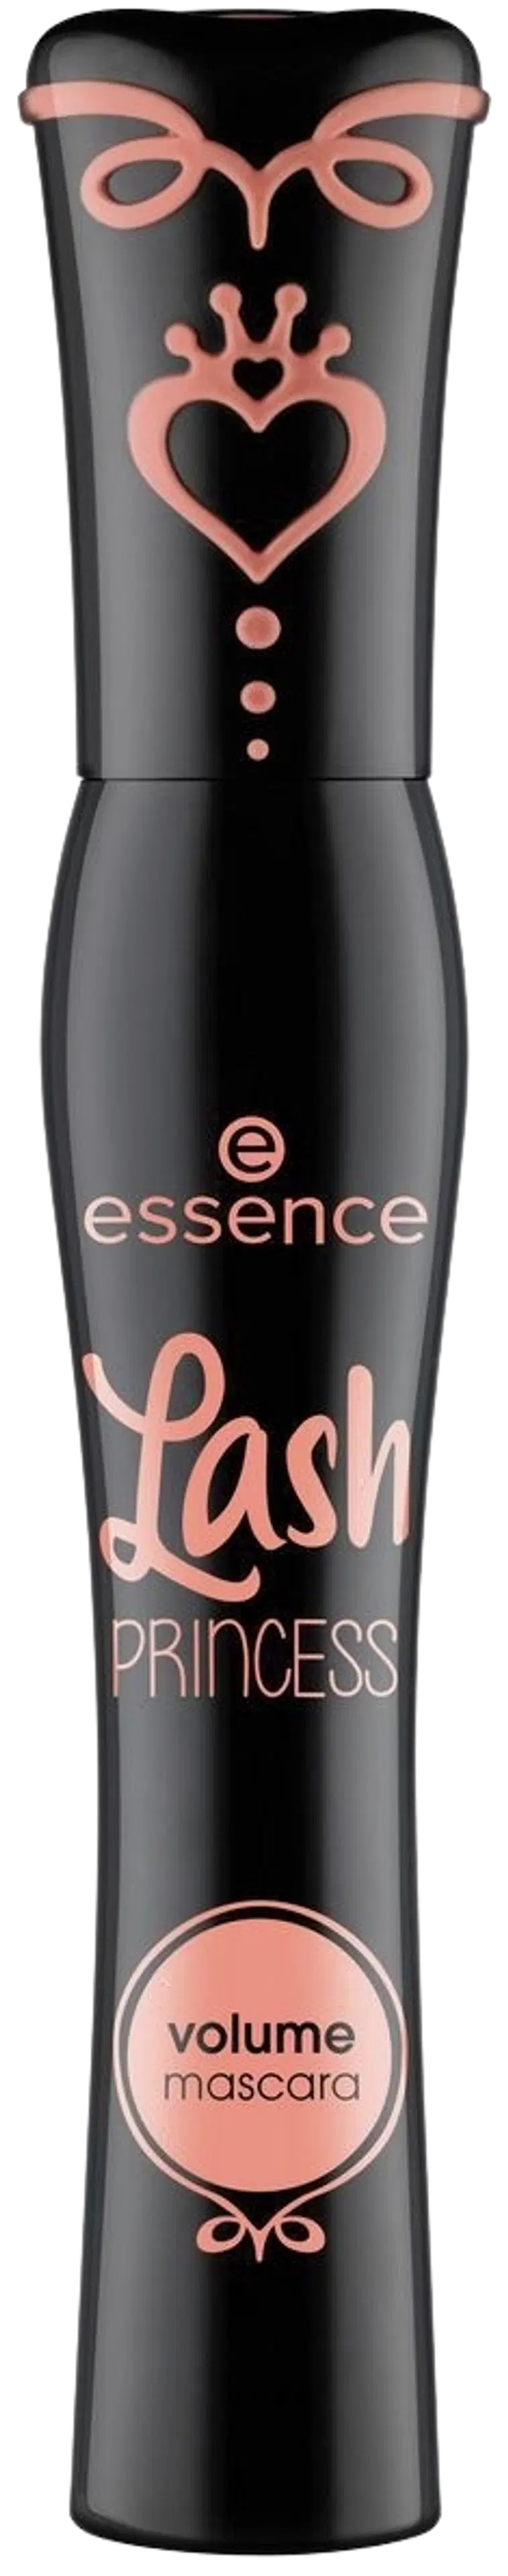 essence Lash PRINCESS volume mascara 12 ml